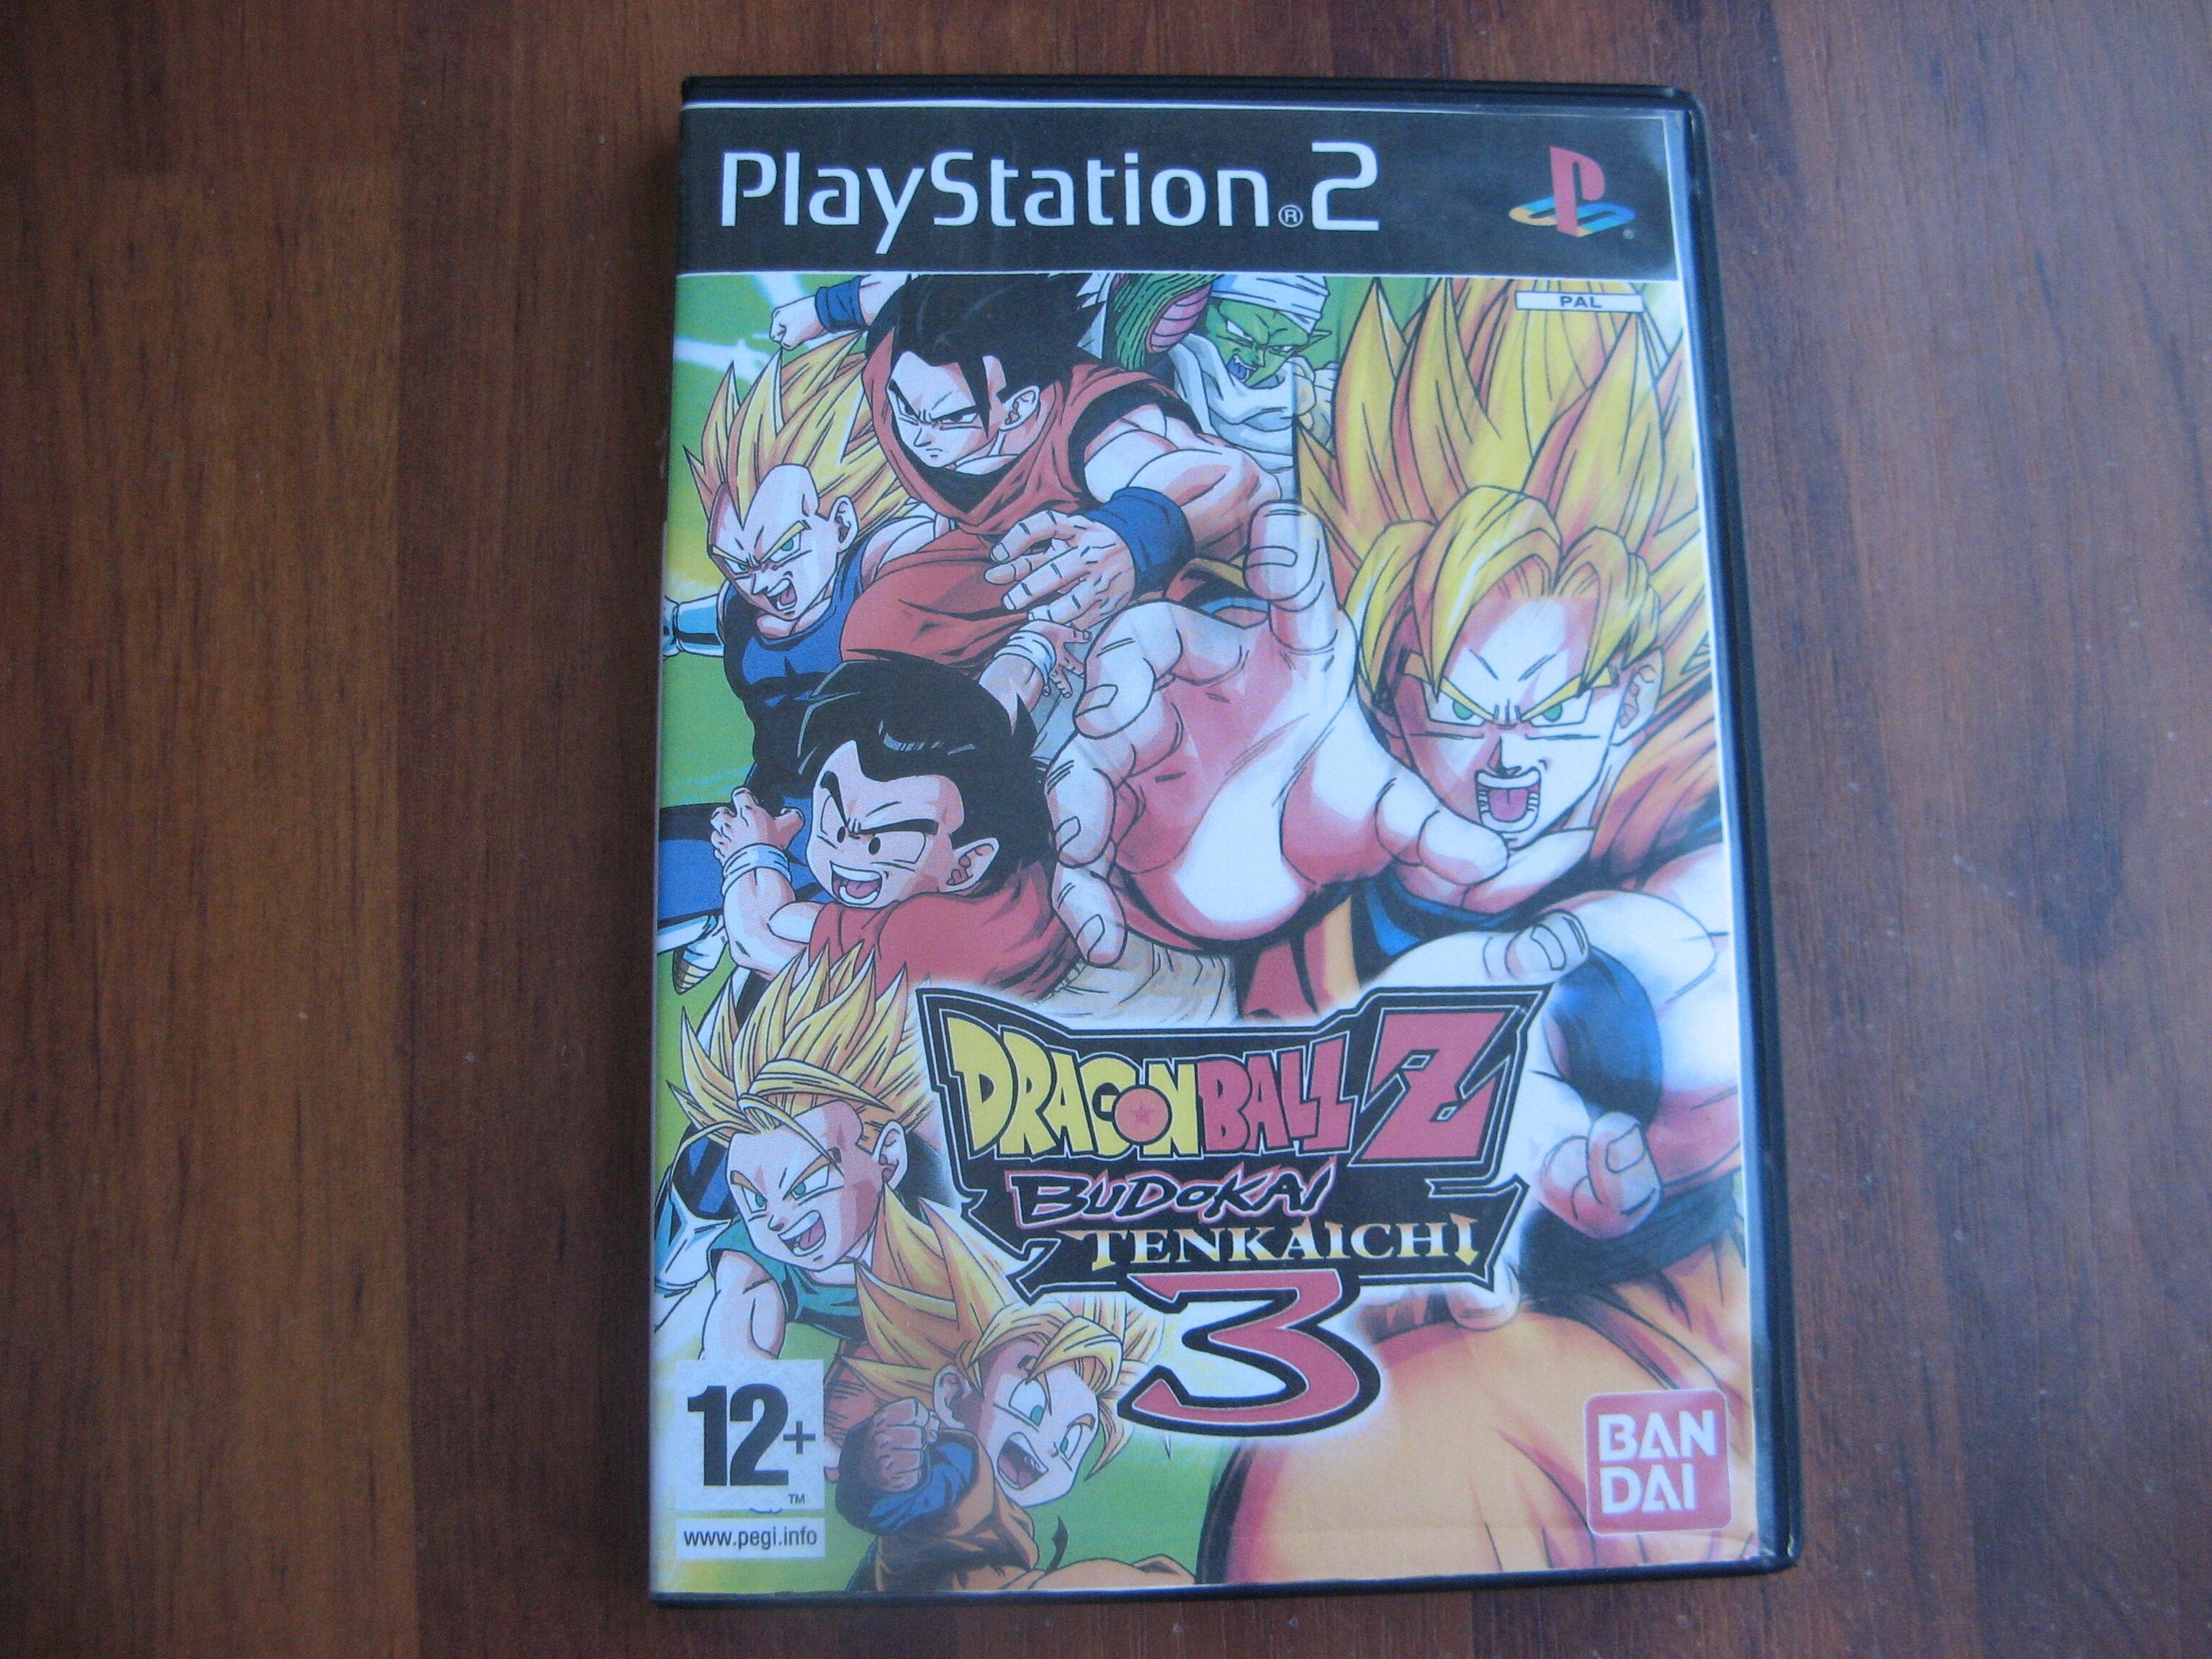 Dragon Ball Z Budokai Tenkaichi 3 - PlayStation 2 - Game Jogo de